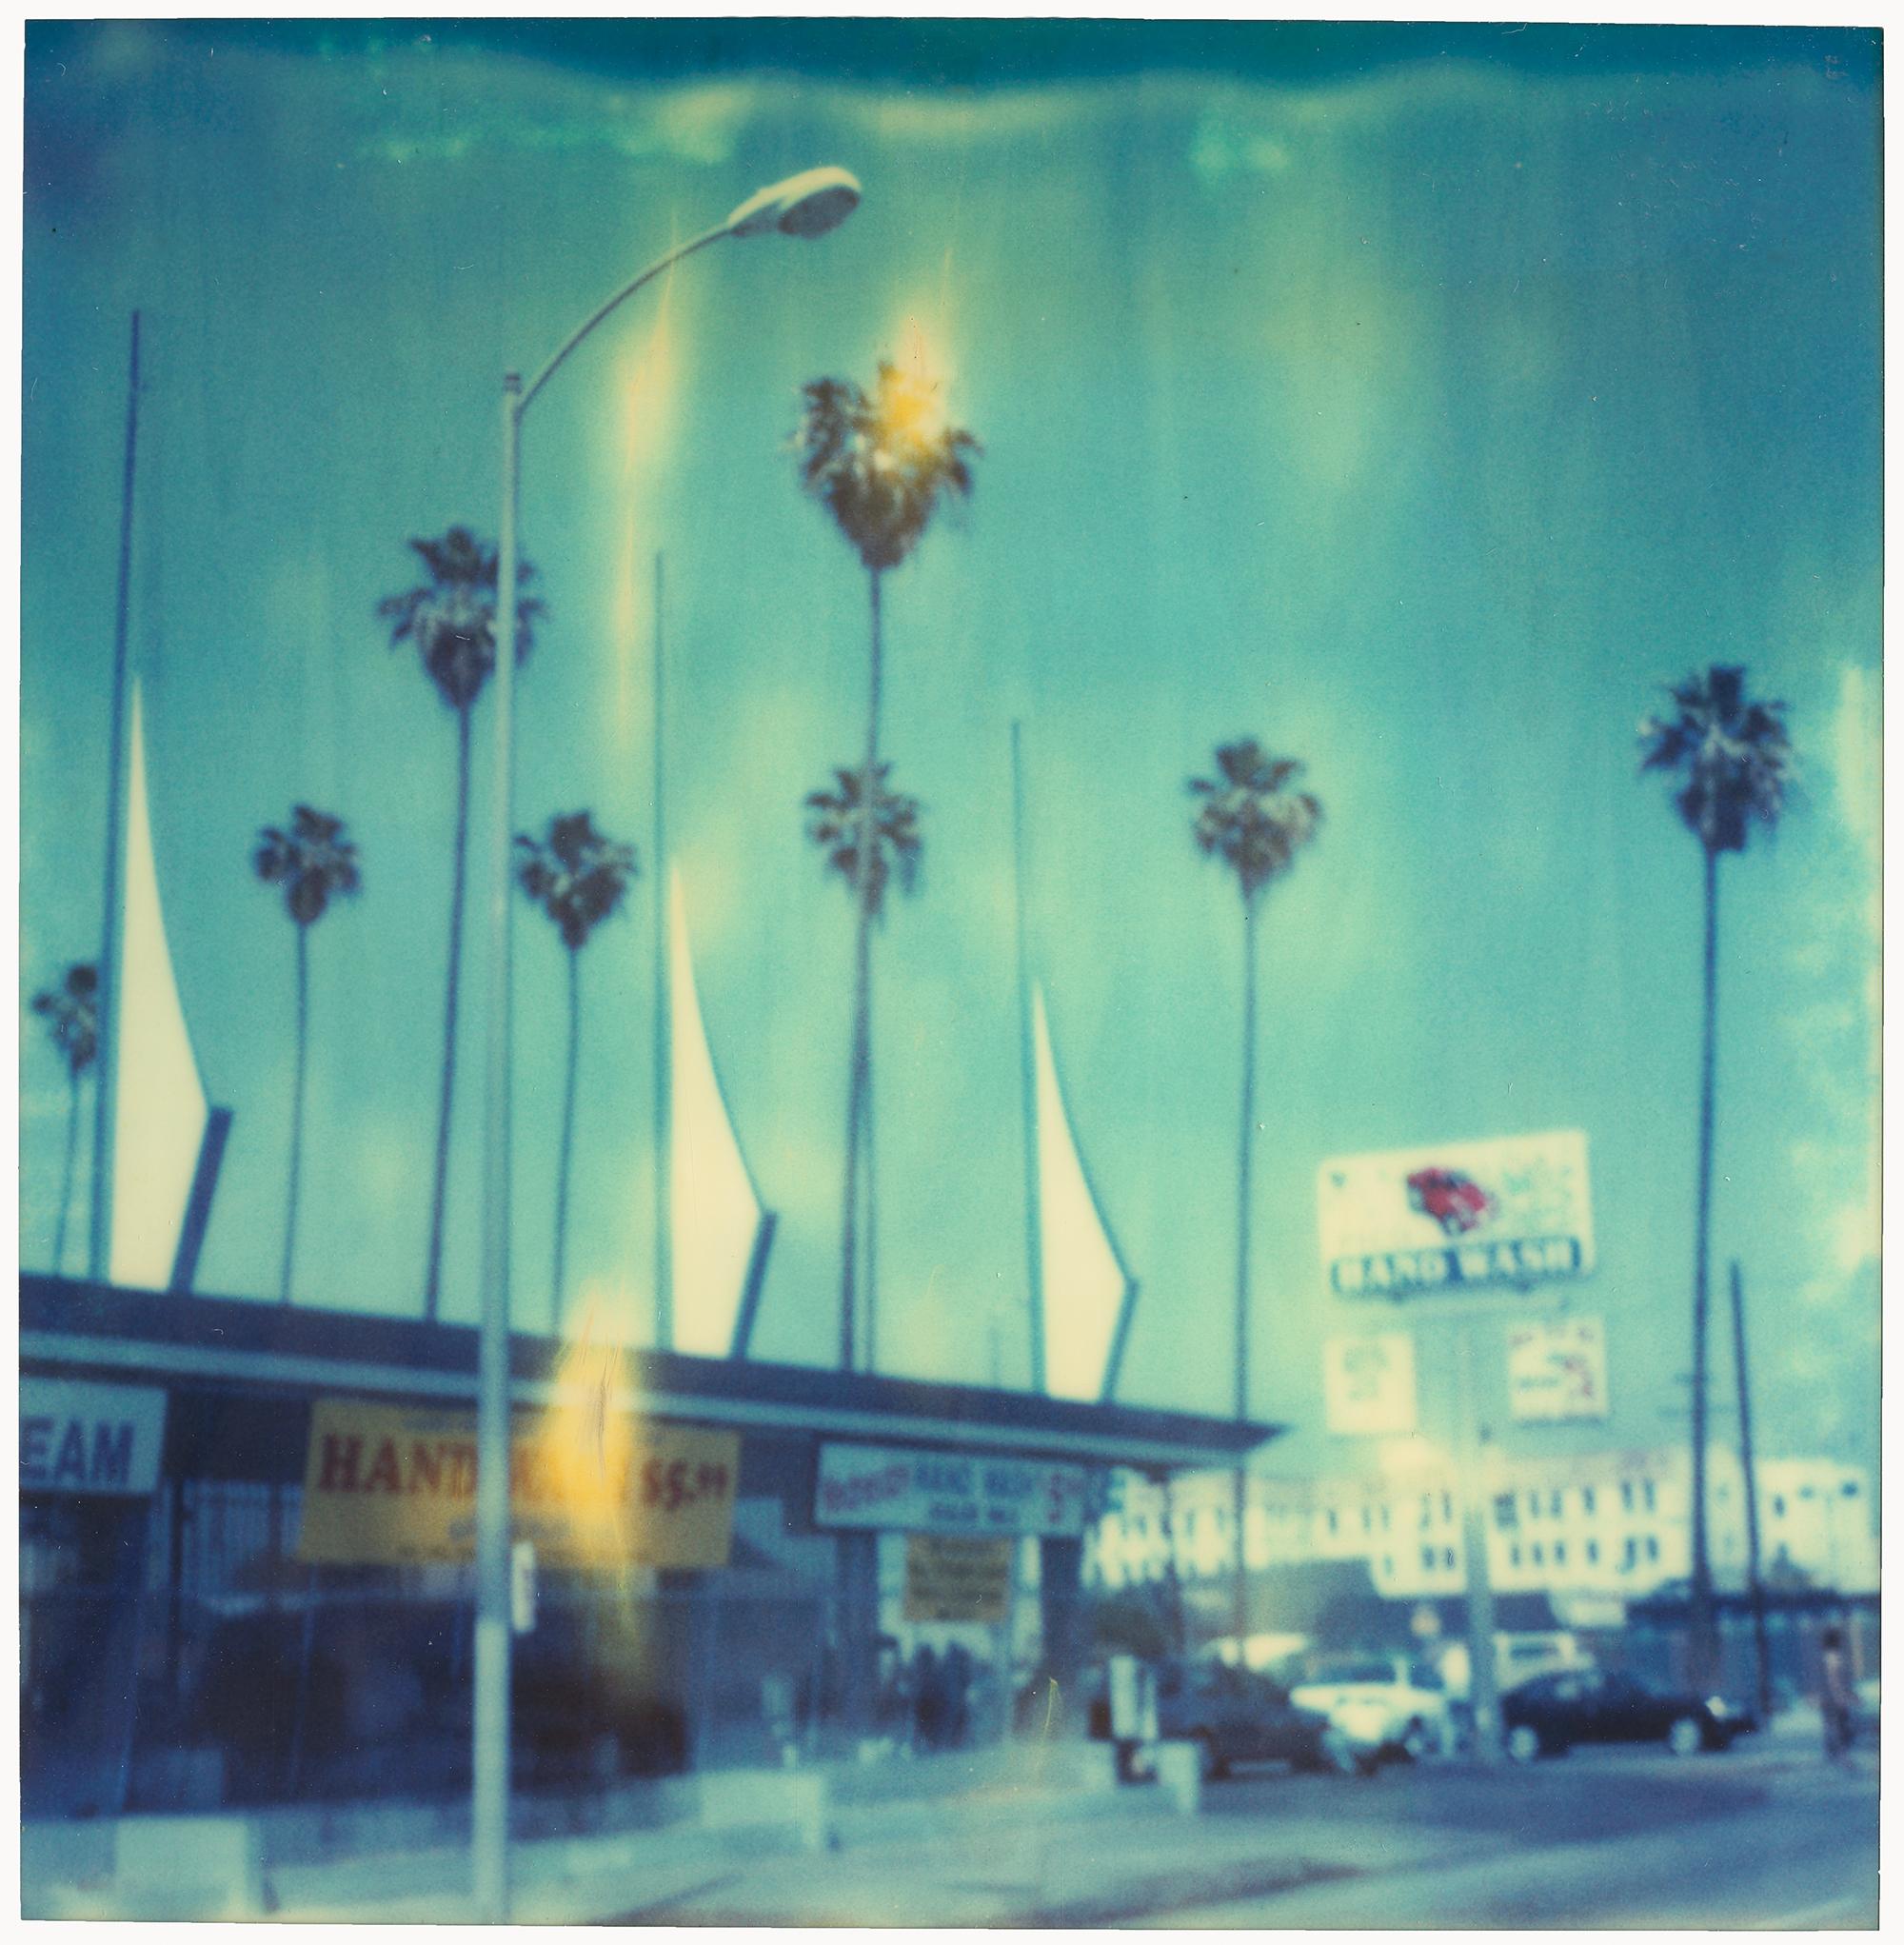 Car Wash - Contemporary, Landscape, Cityscape, expired, Polaroid, analog, Blue - Photograph by Stefanie Schneider